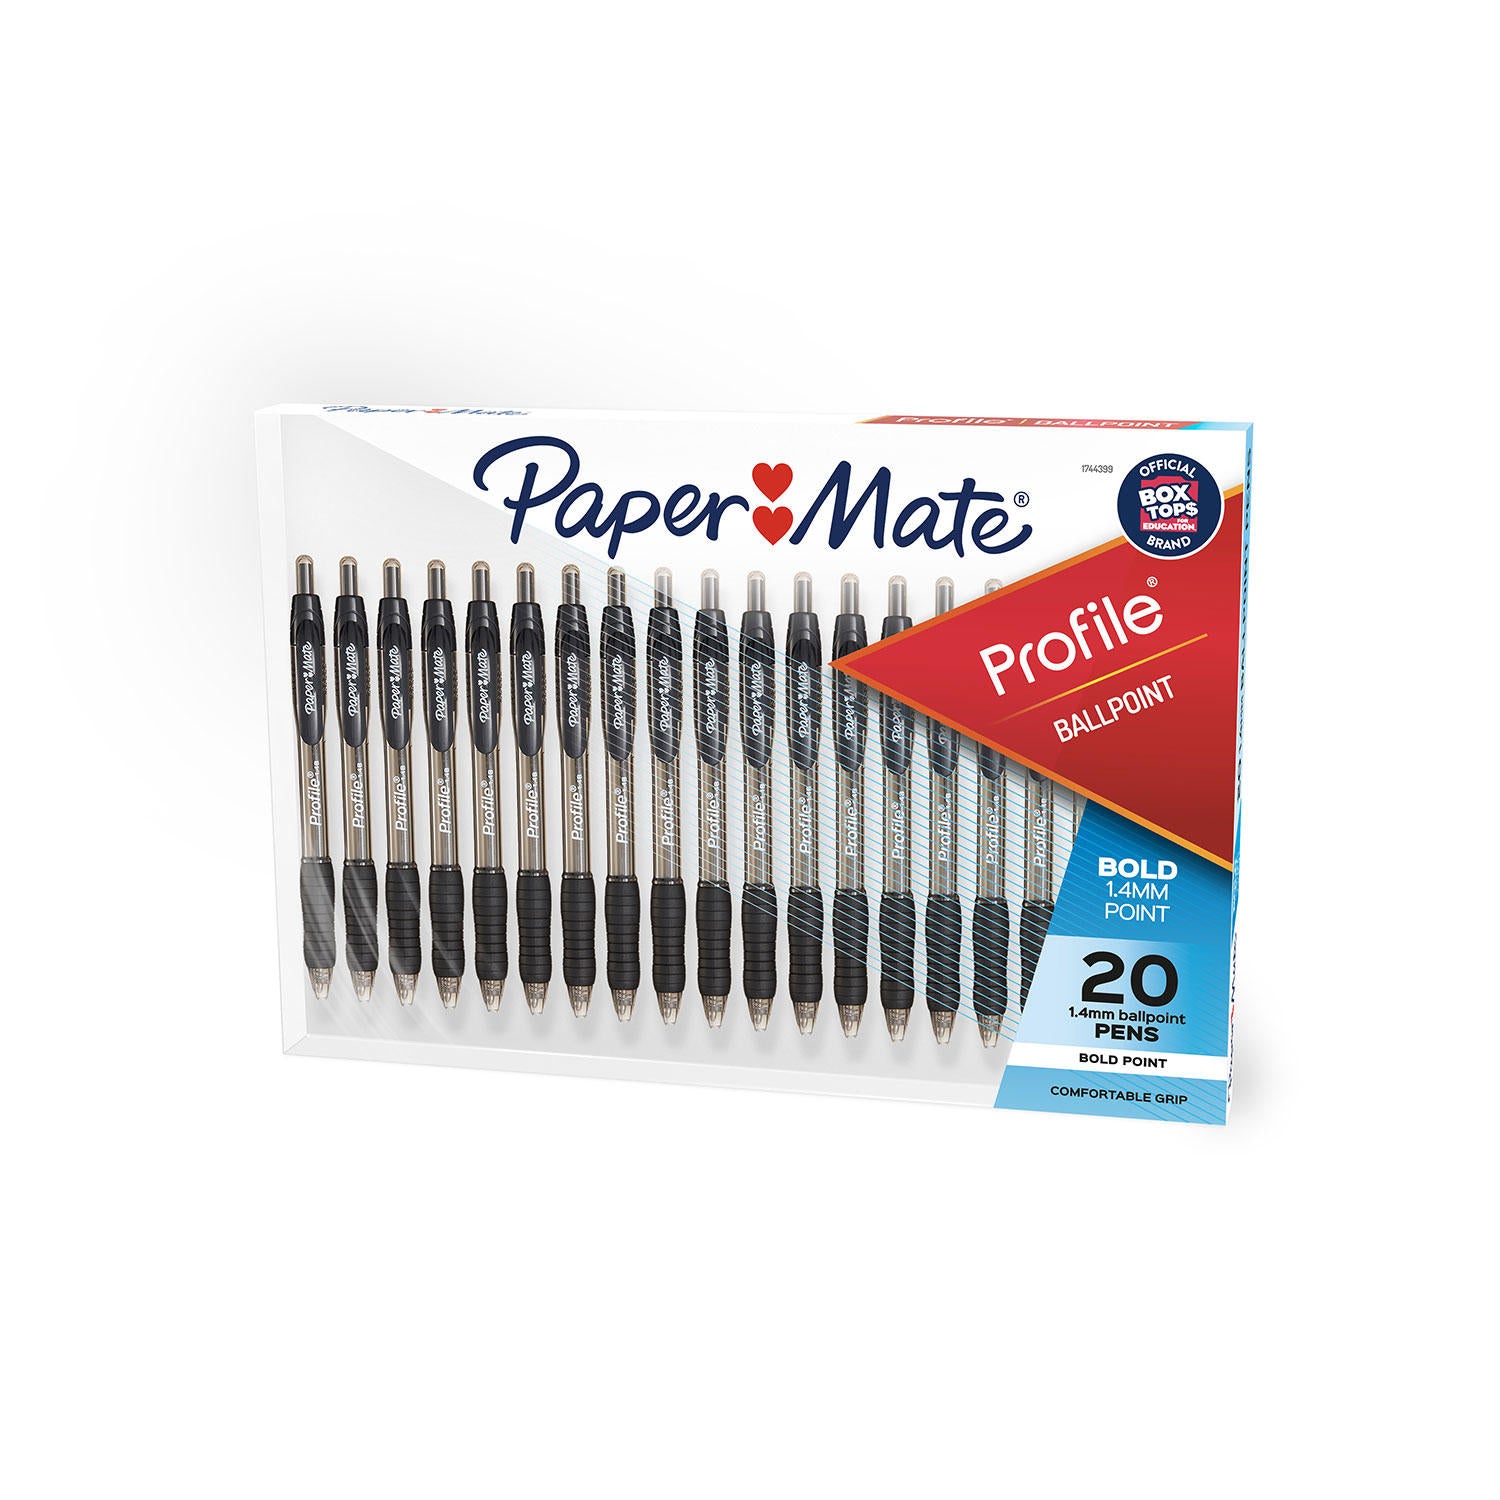 Paper Mate Ballpoint Pen, Profile Retractable Pen, Bold Point (1.4mm), – My  Kosher Cart